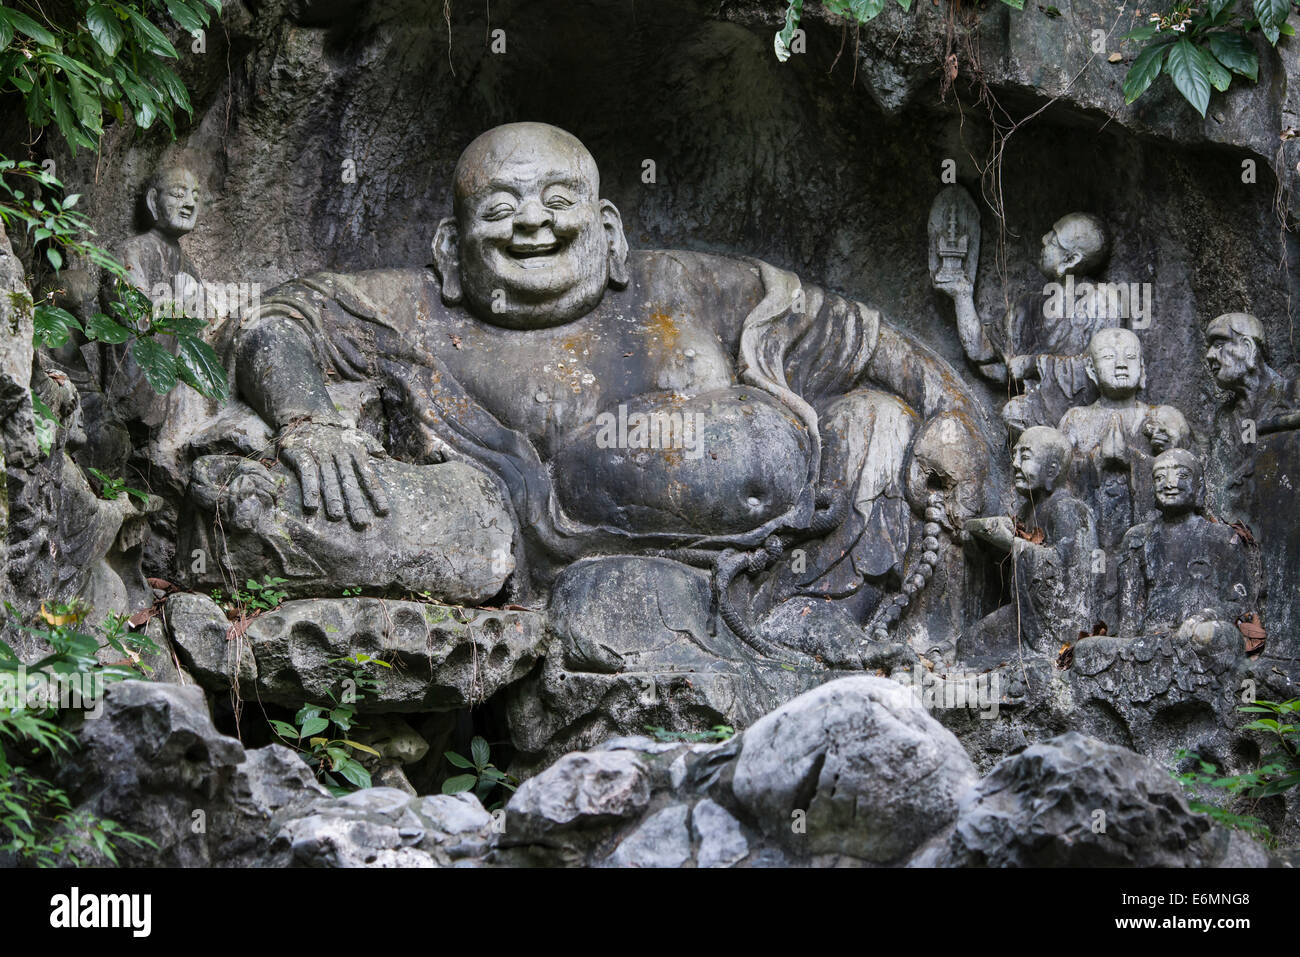 Laughing Buddha, Lingyin Monastery, Hangzhou, China Stock Photo